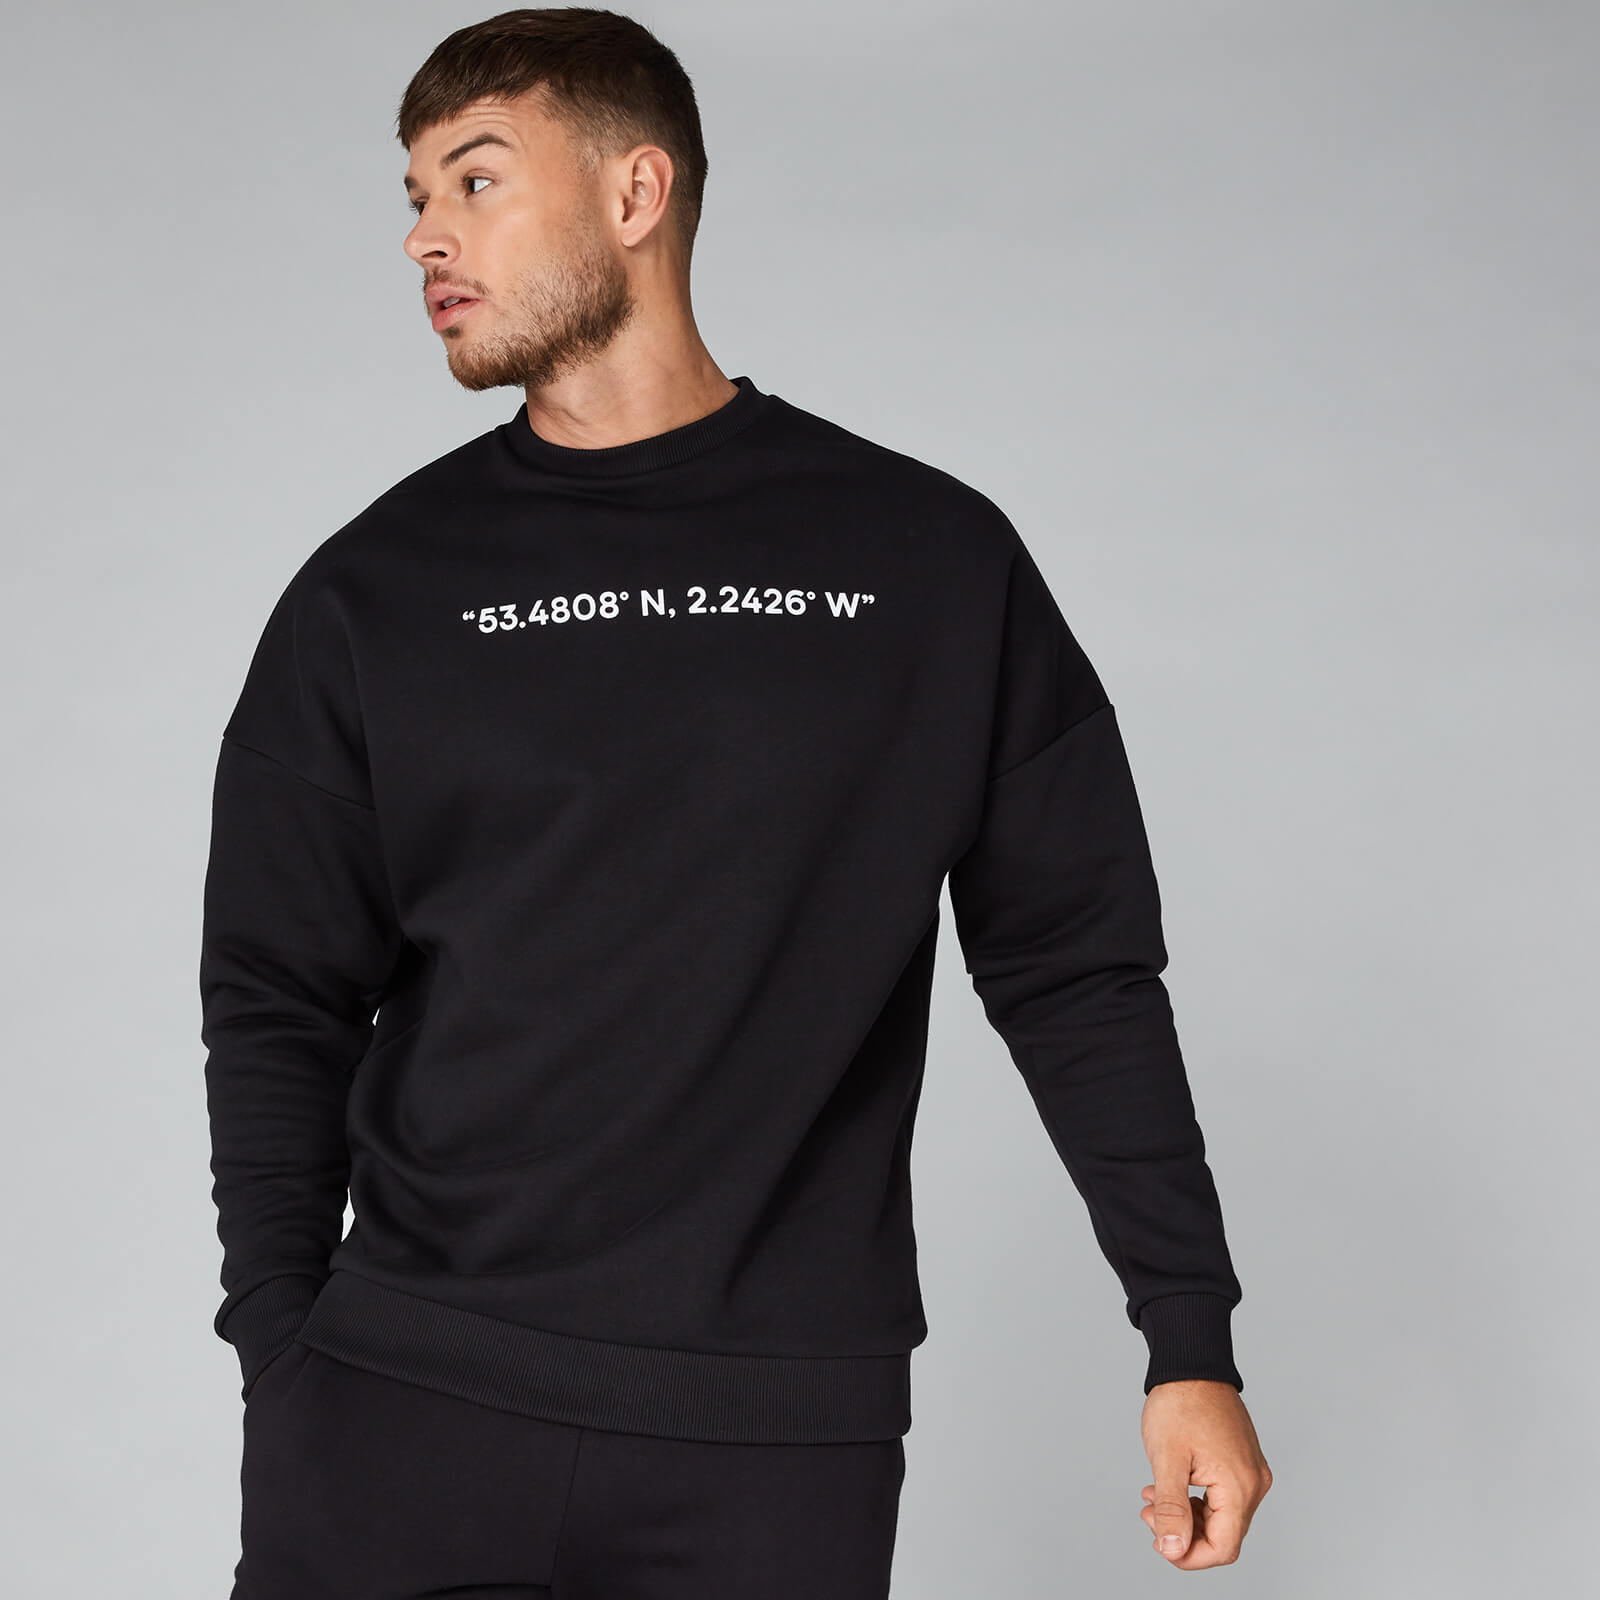 Coordinates Sweatshirt - Black